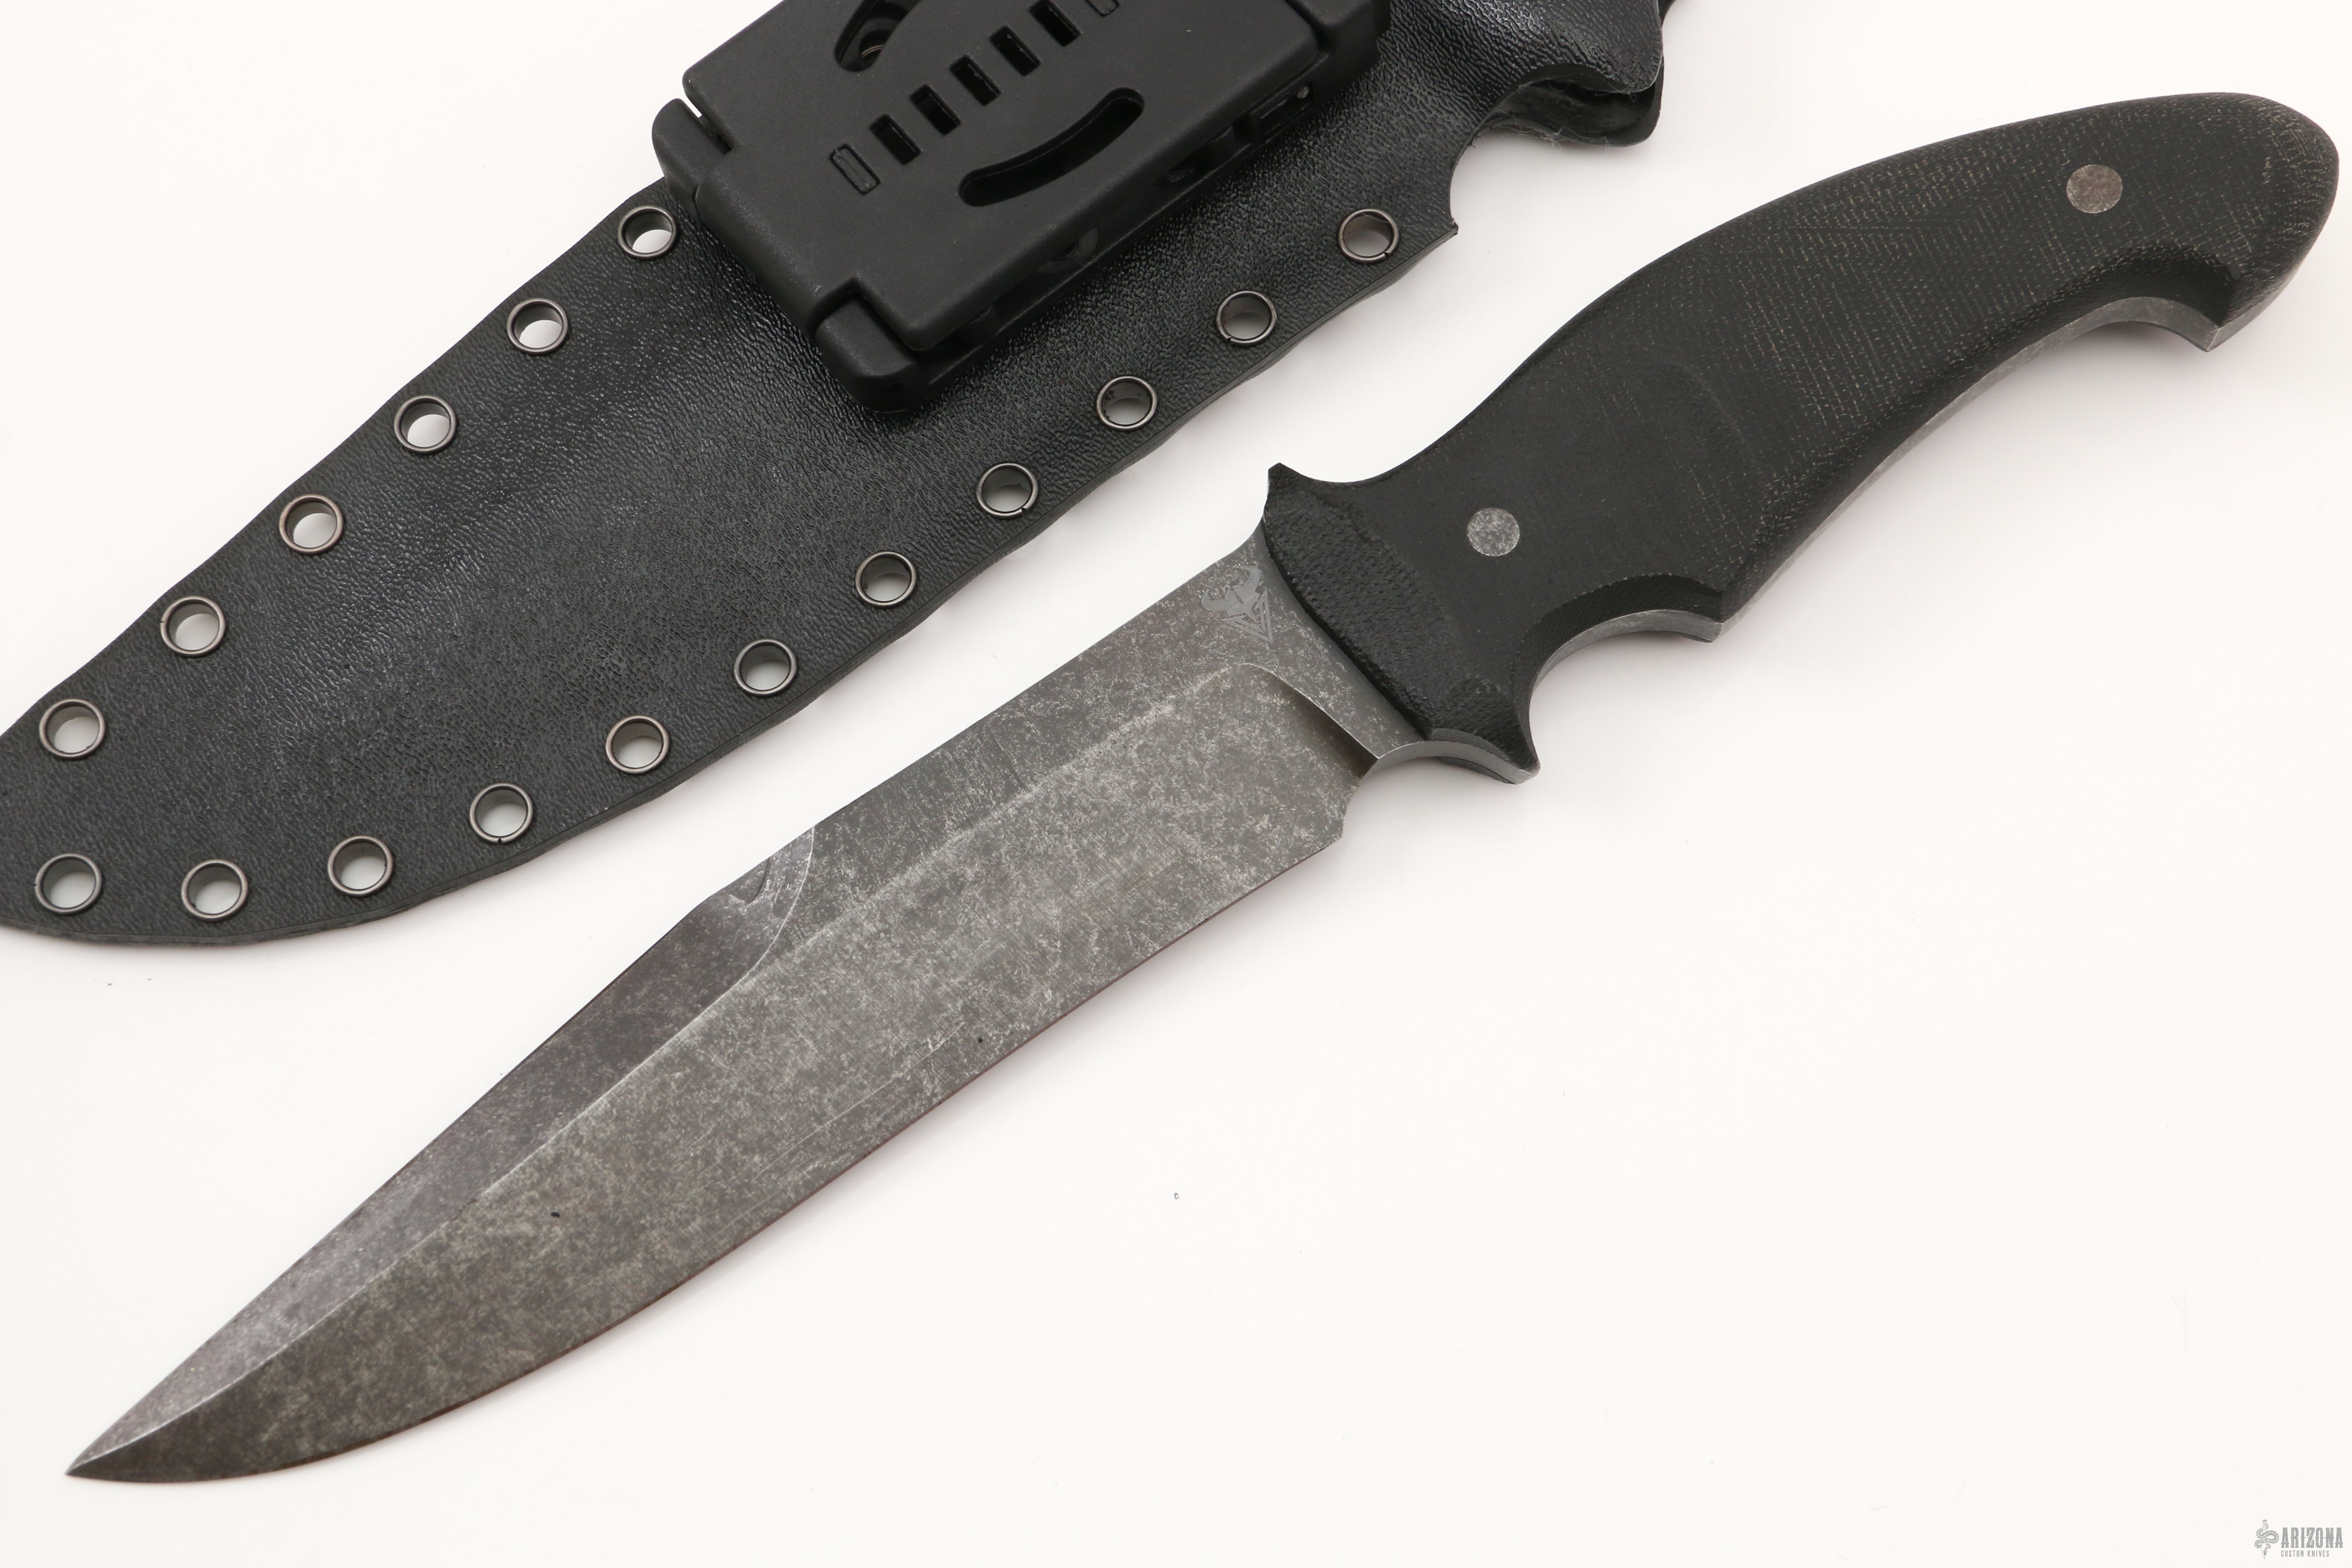 Black Knife (SEAL)  Arizona Custom Knives